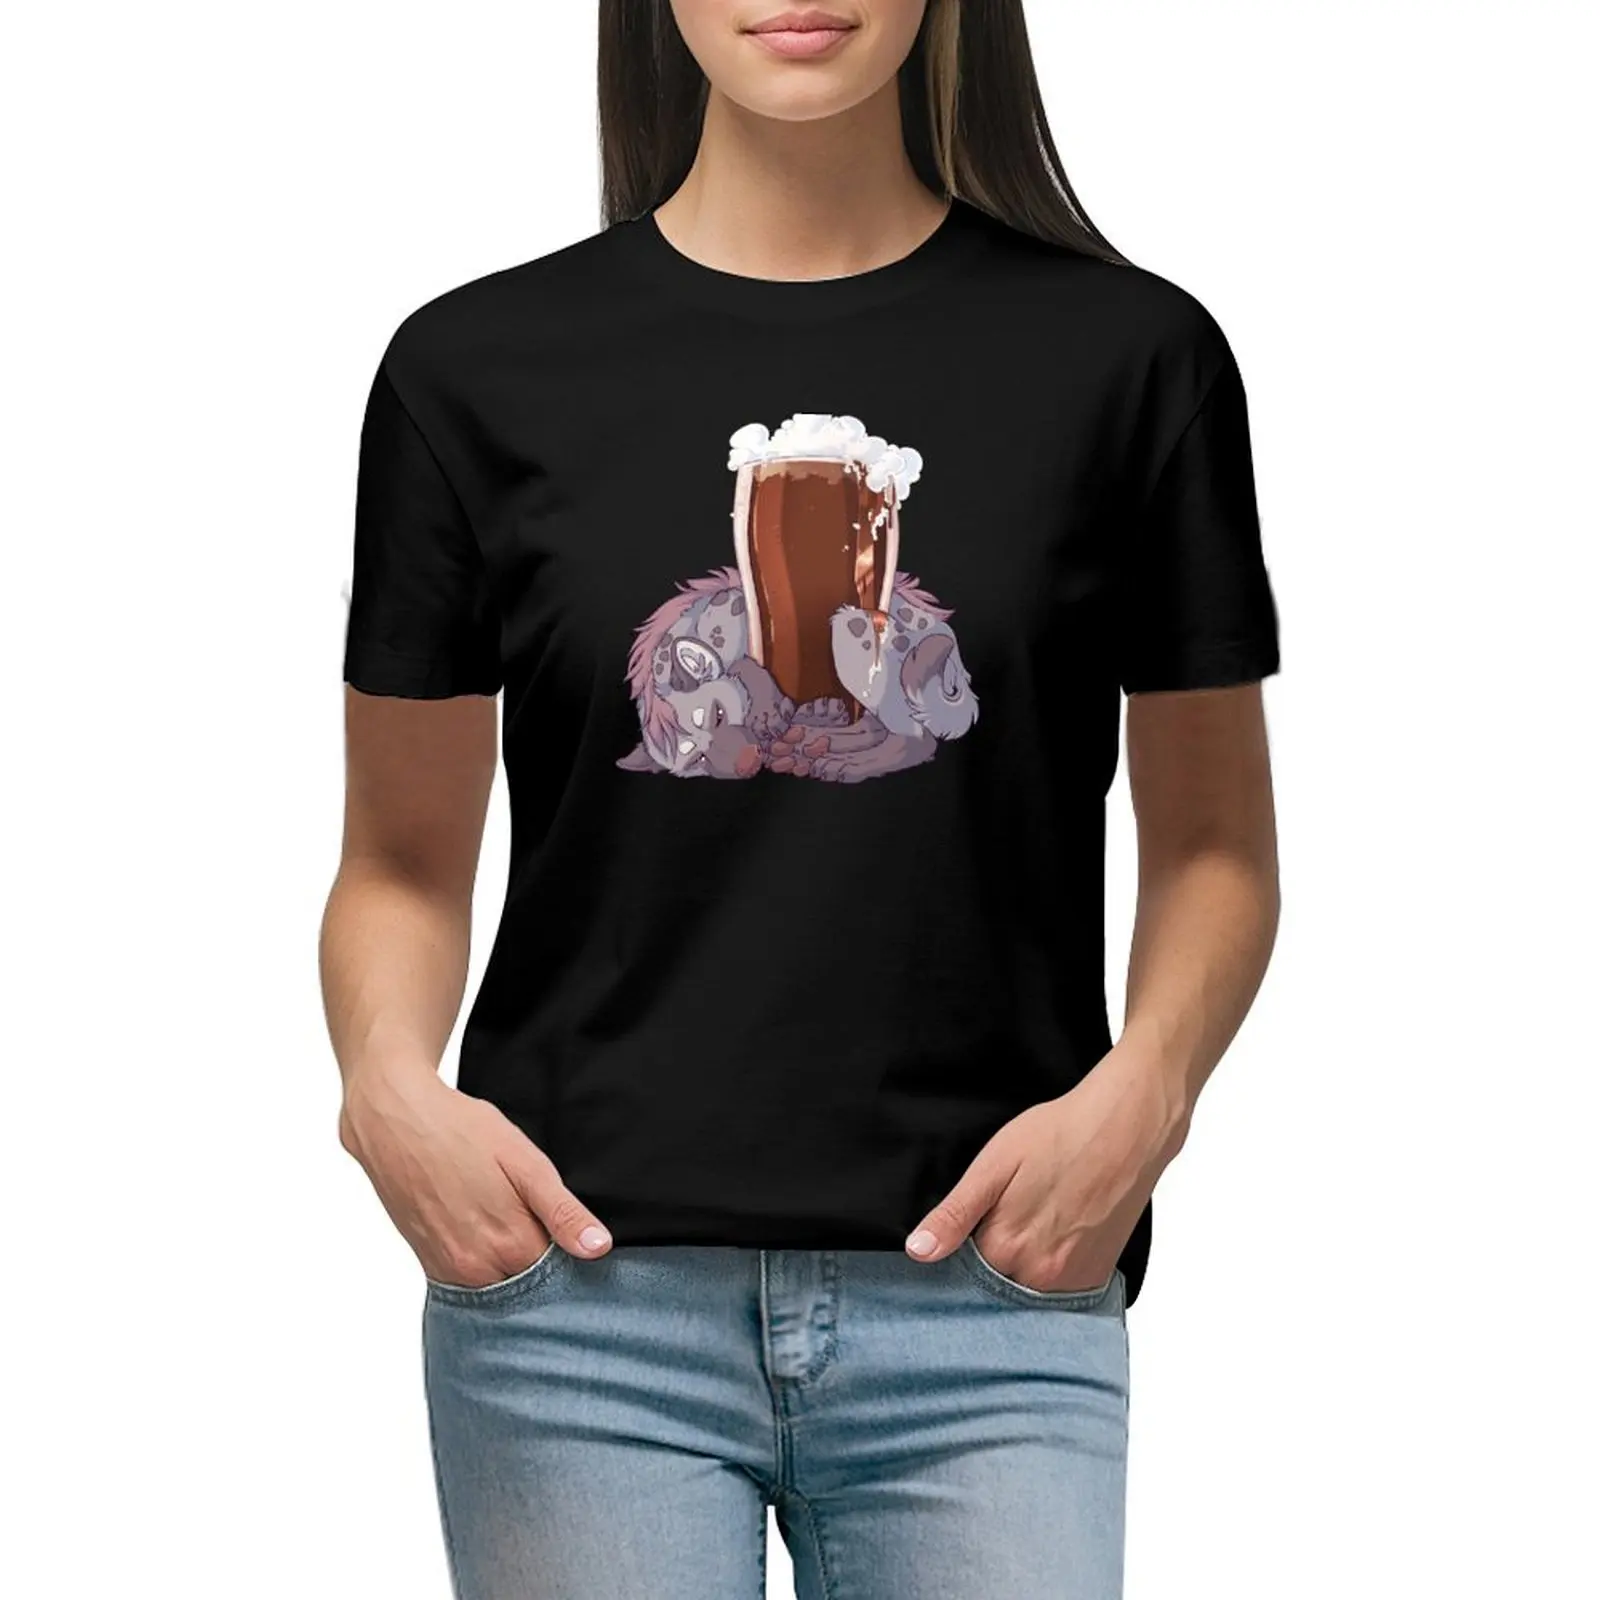 

[Yeen Beer] Brown Pint T-shirt oversized summer tops tees womans clothing